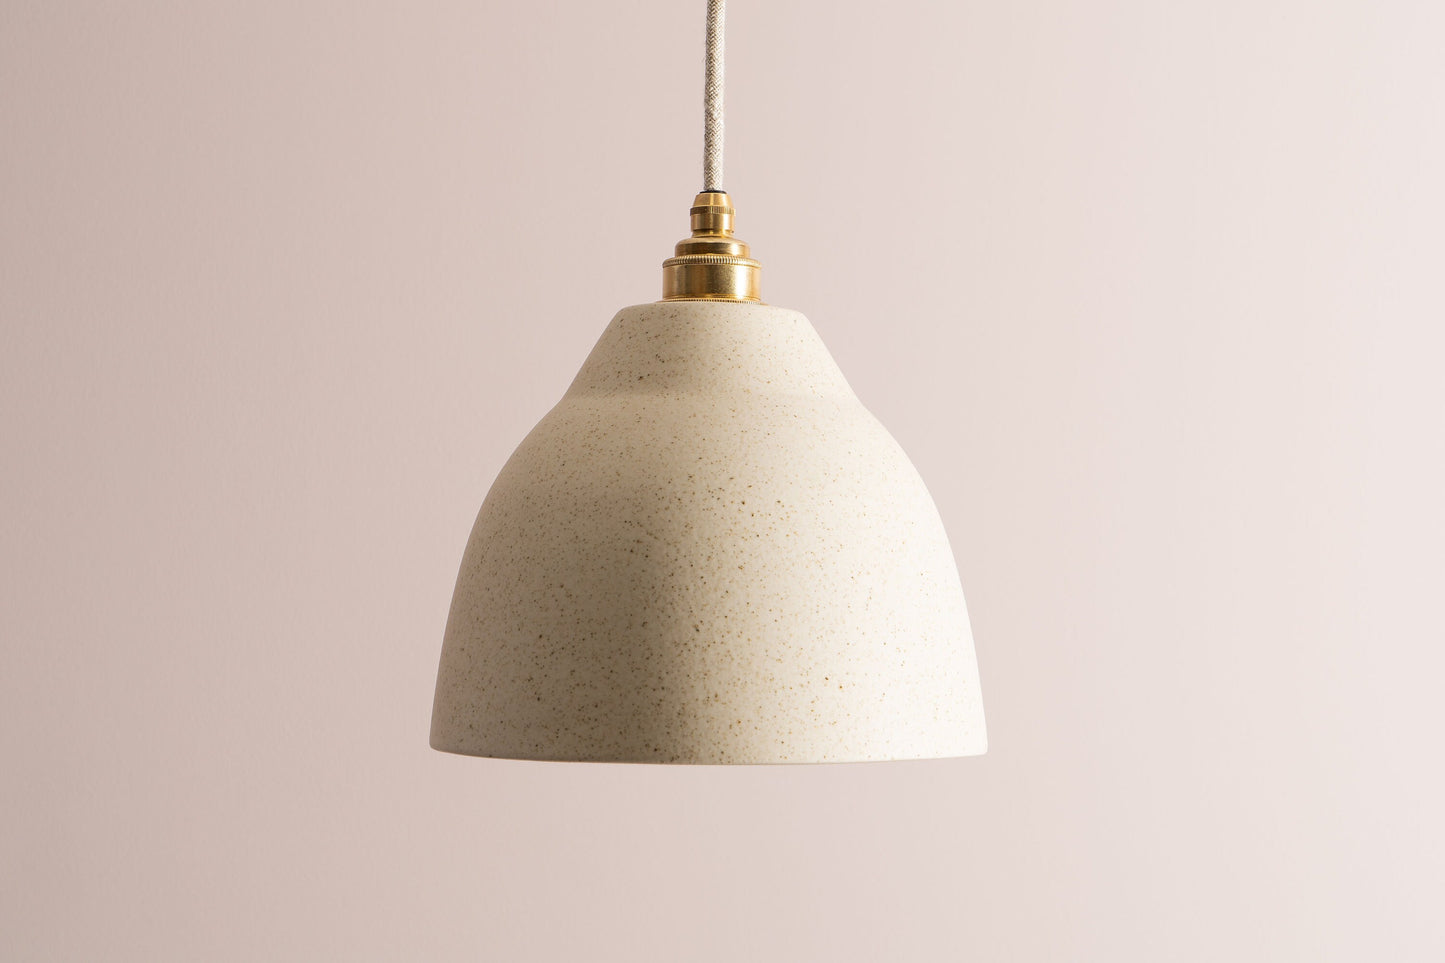 Speckled Cream Matt Element Pendant Light in Ceramic and Brass/Nickel by StudioHaran